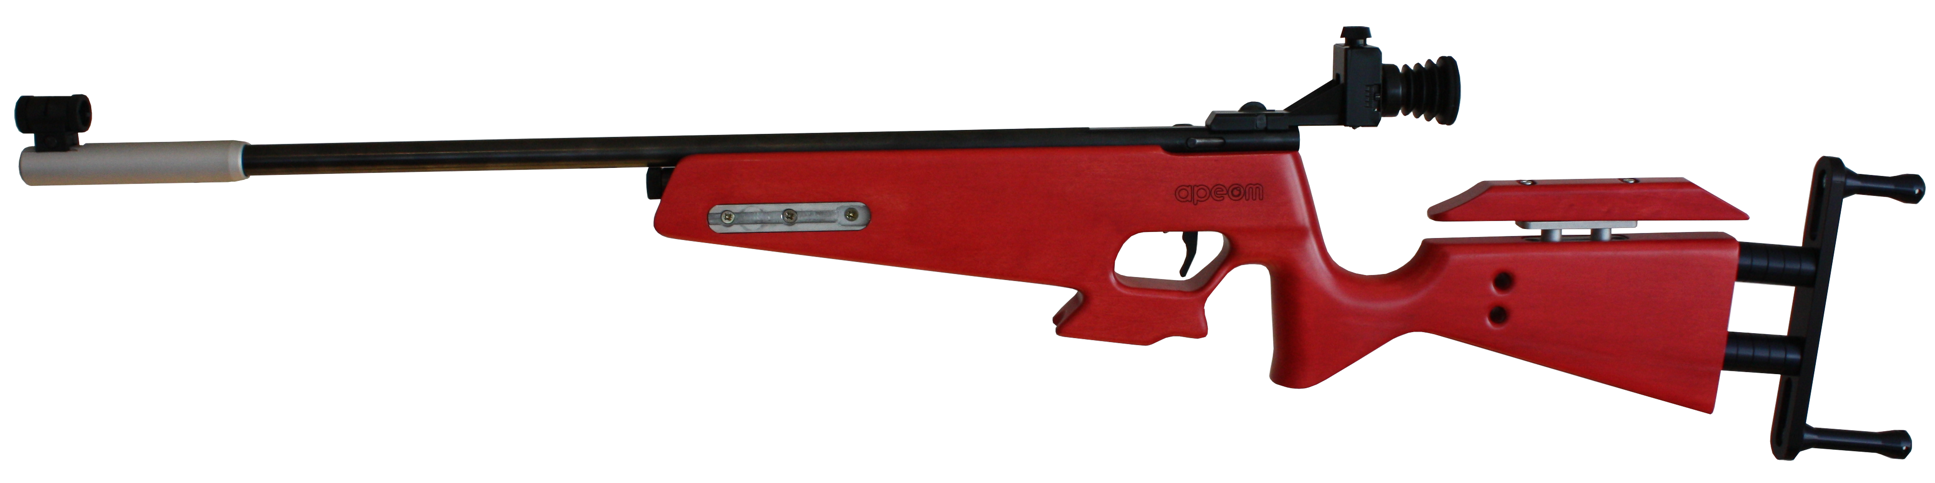 Laser rifle E-Gun 133 - 